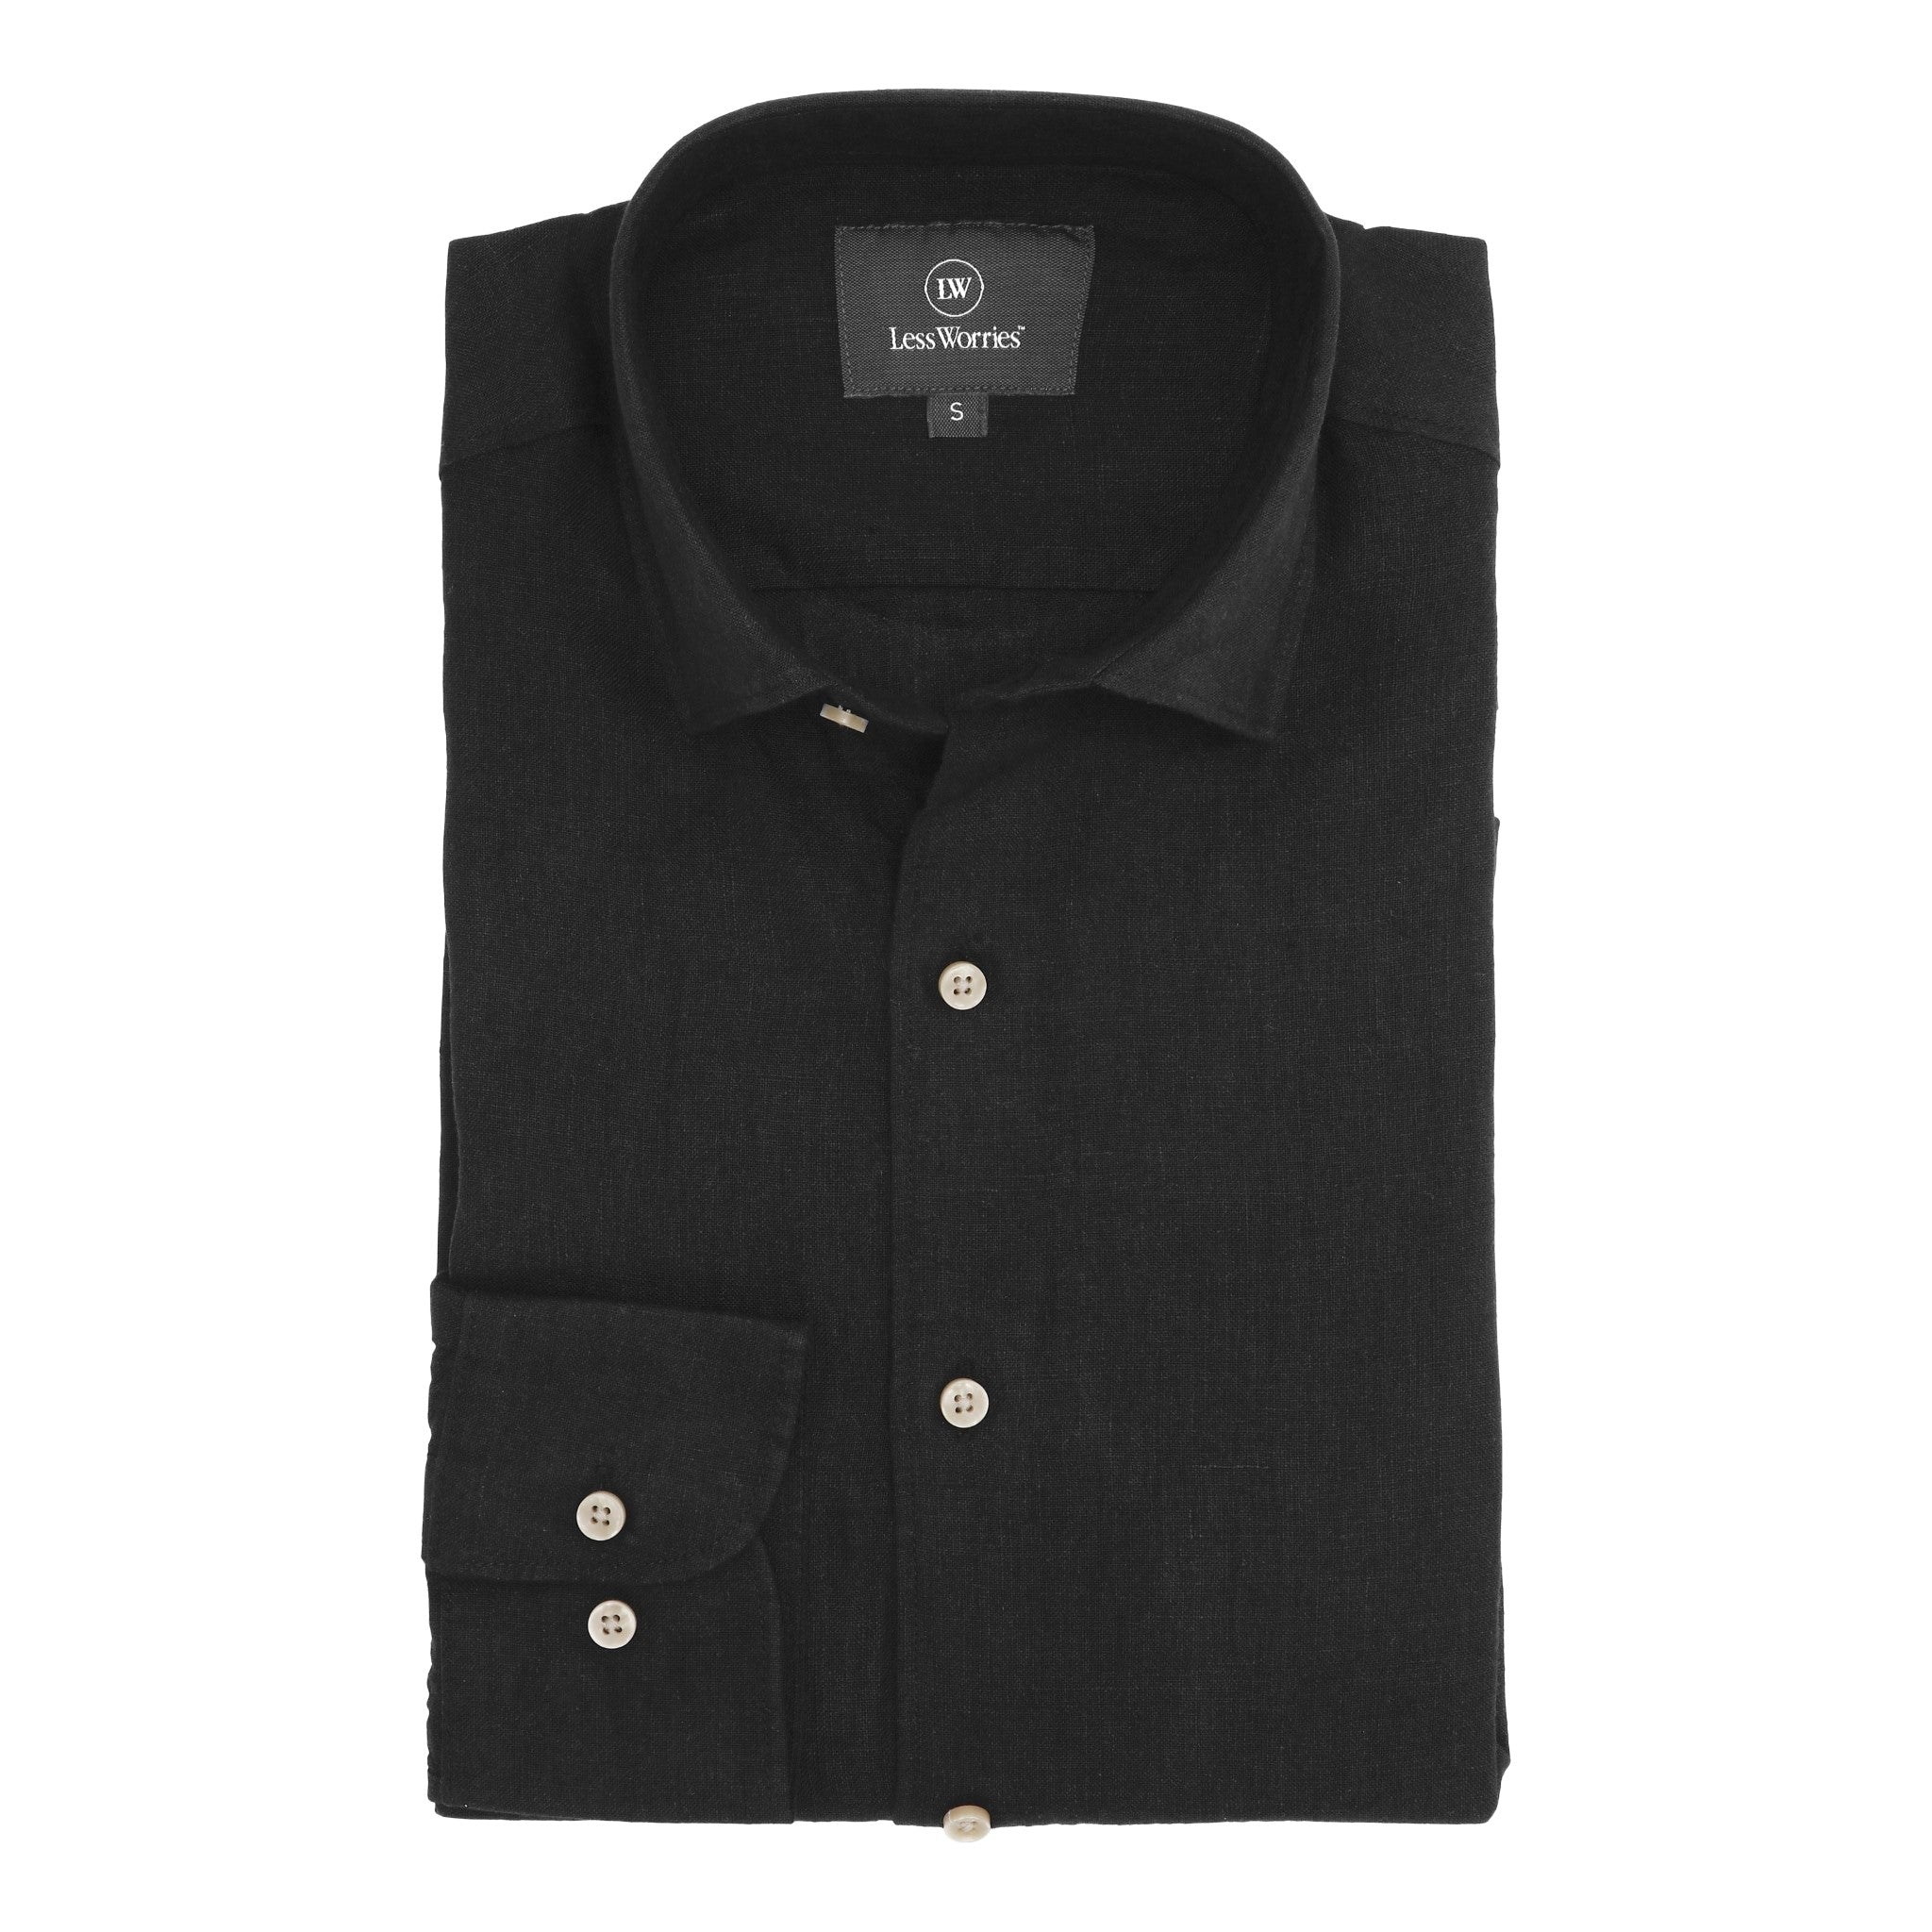 Black linen shirt with a classic collar